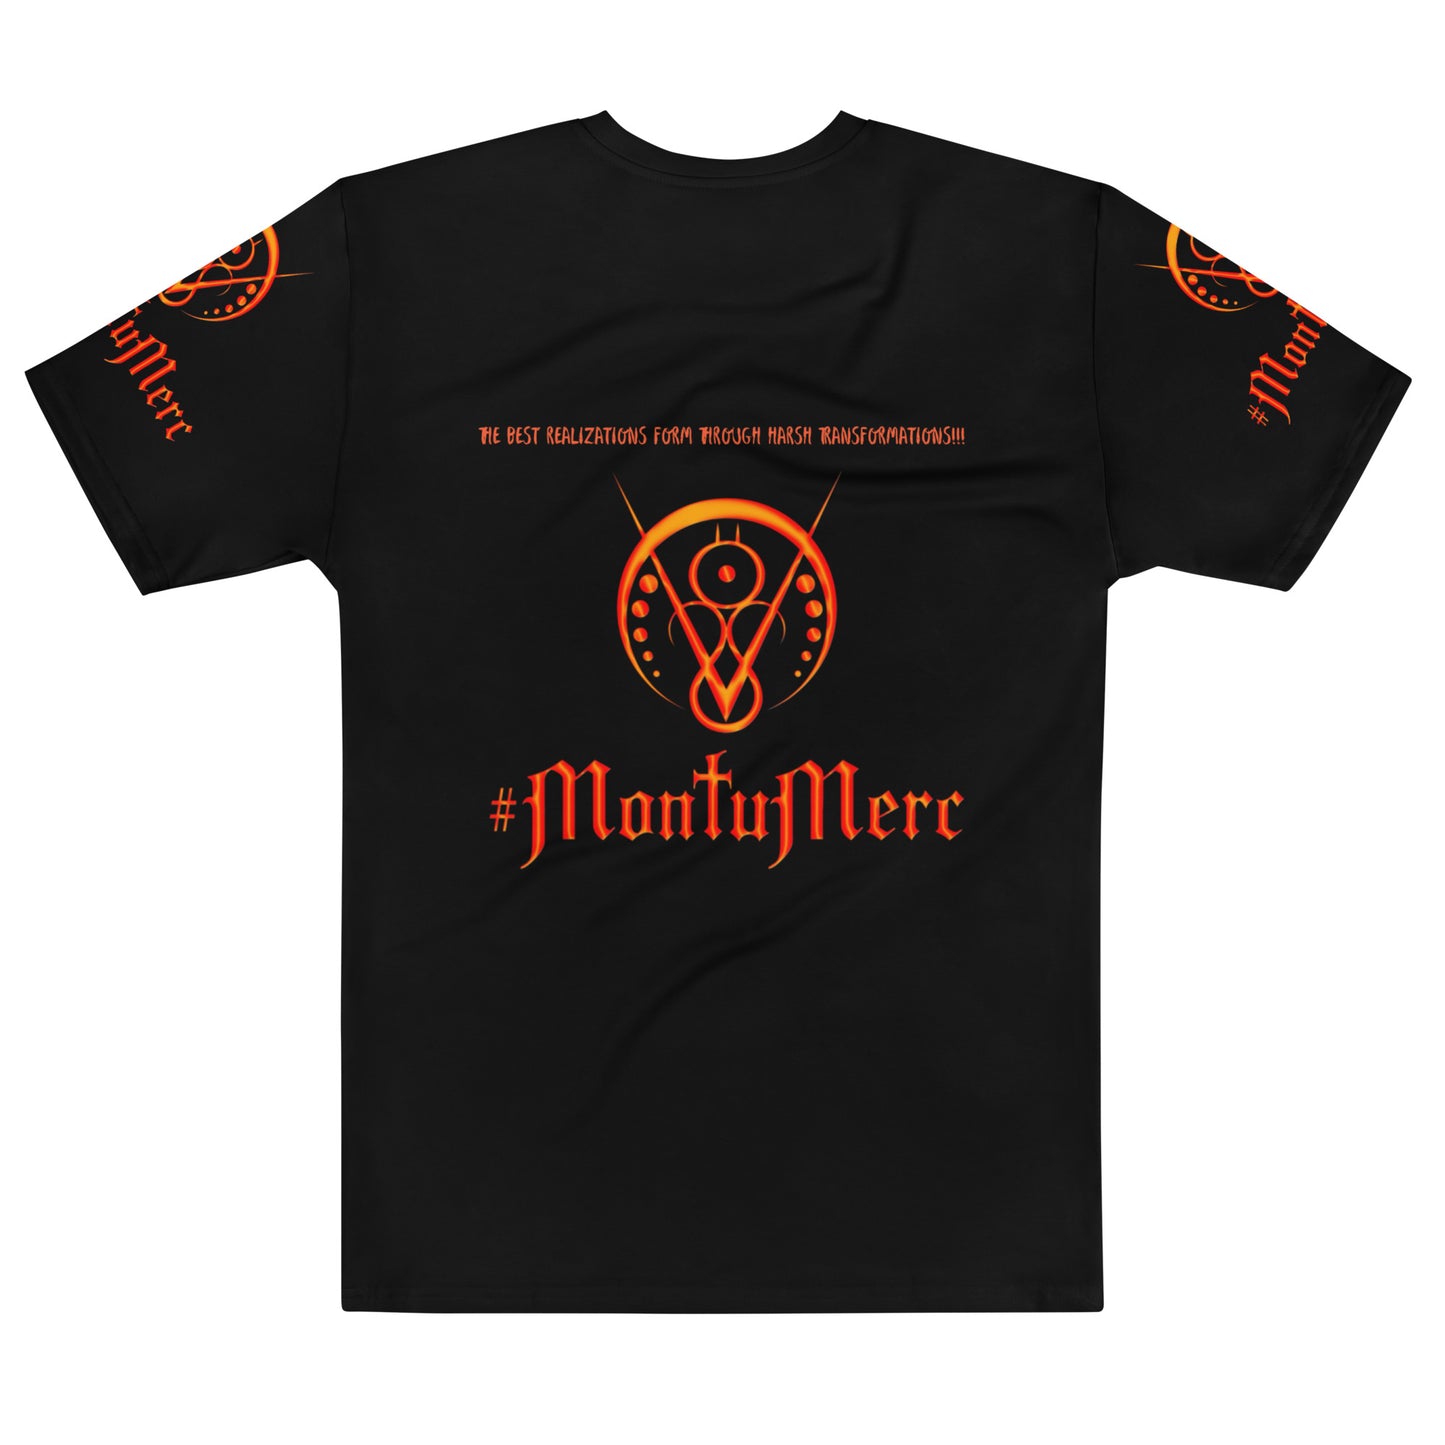 #MontuMerc Sacral Black All-Around Men's t-shirt